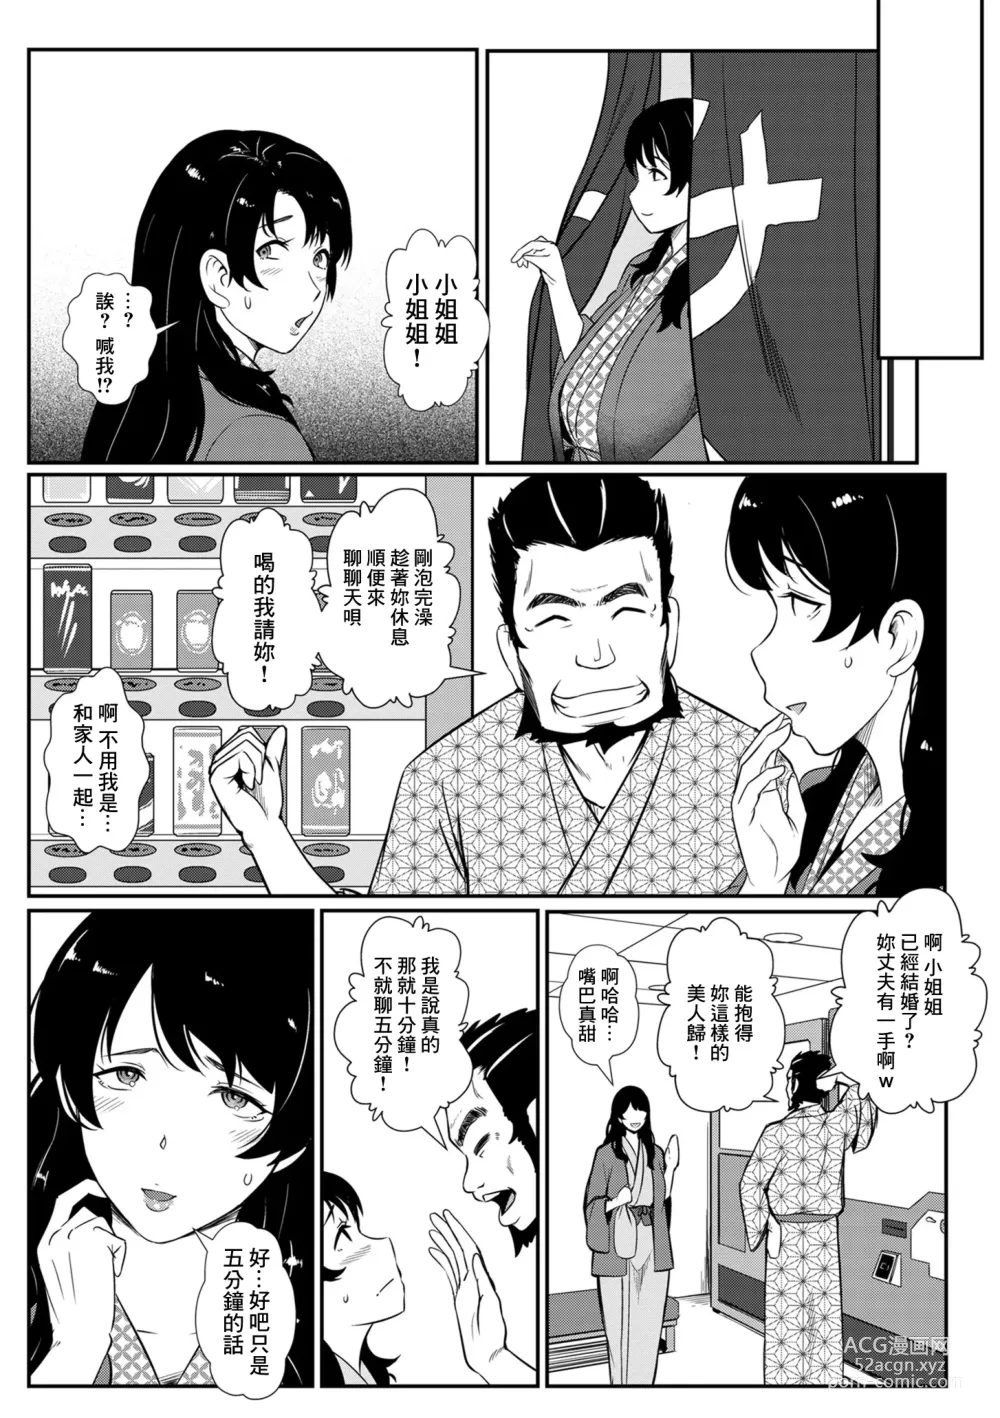 Page 6 of manga Haha wa Tabi no Owari ni...